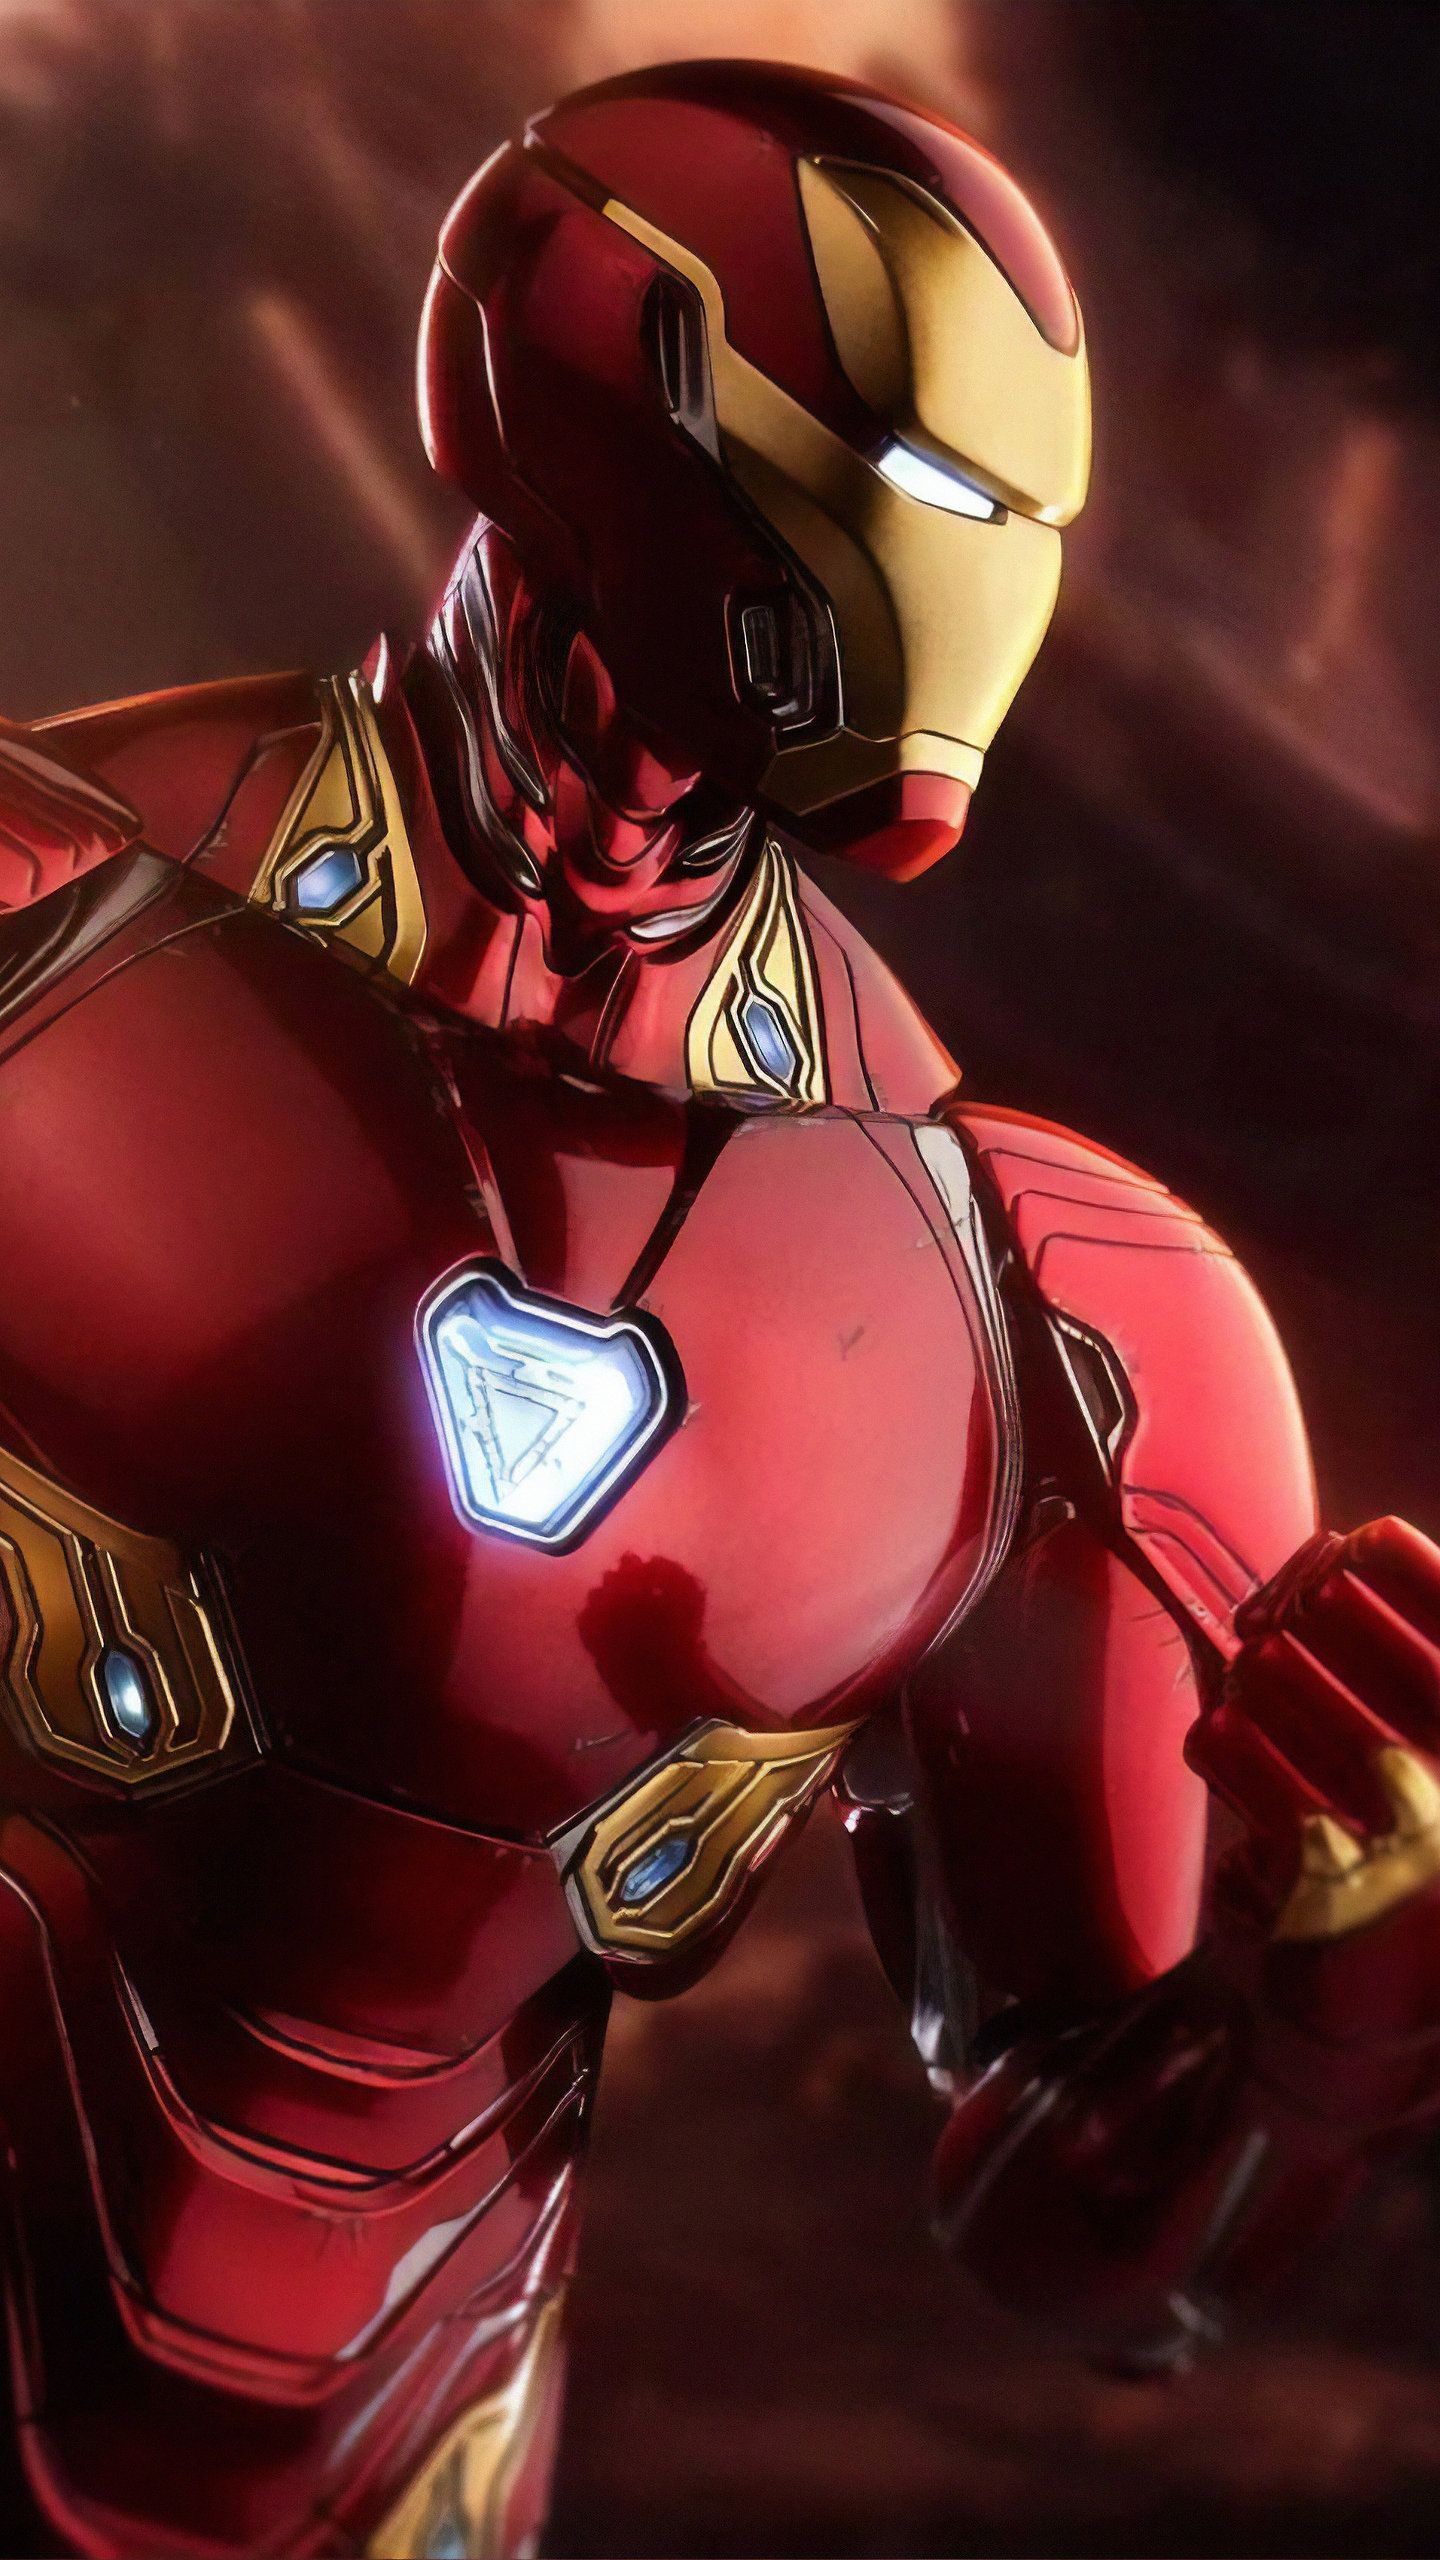 4K New Ironman HD Wallpaper. Iron man avengers, Iron man, Marvel